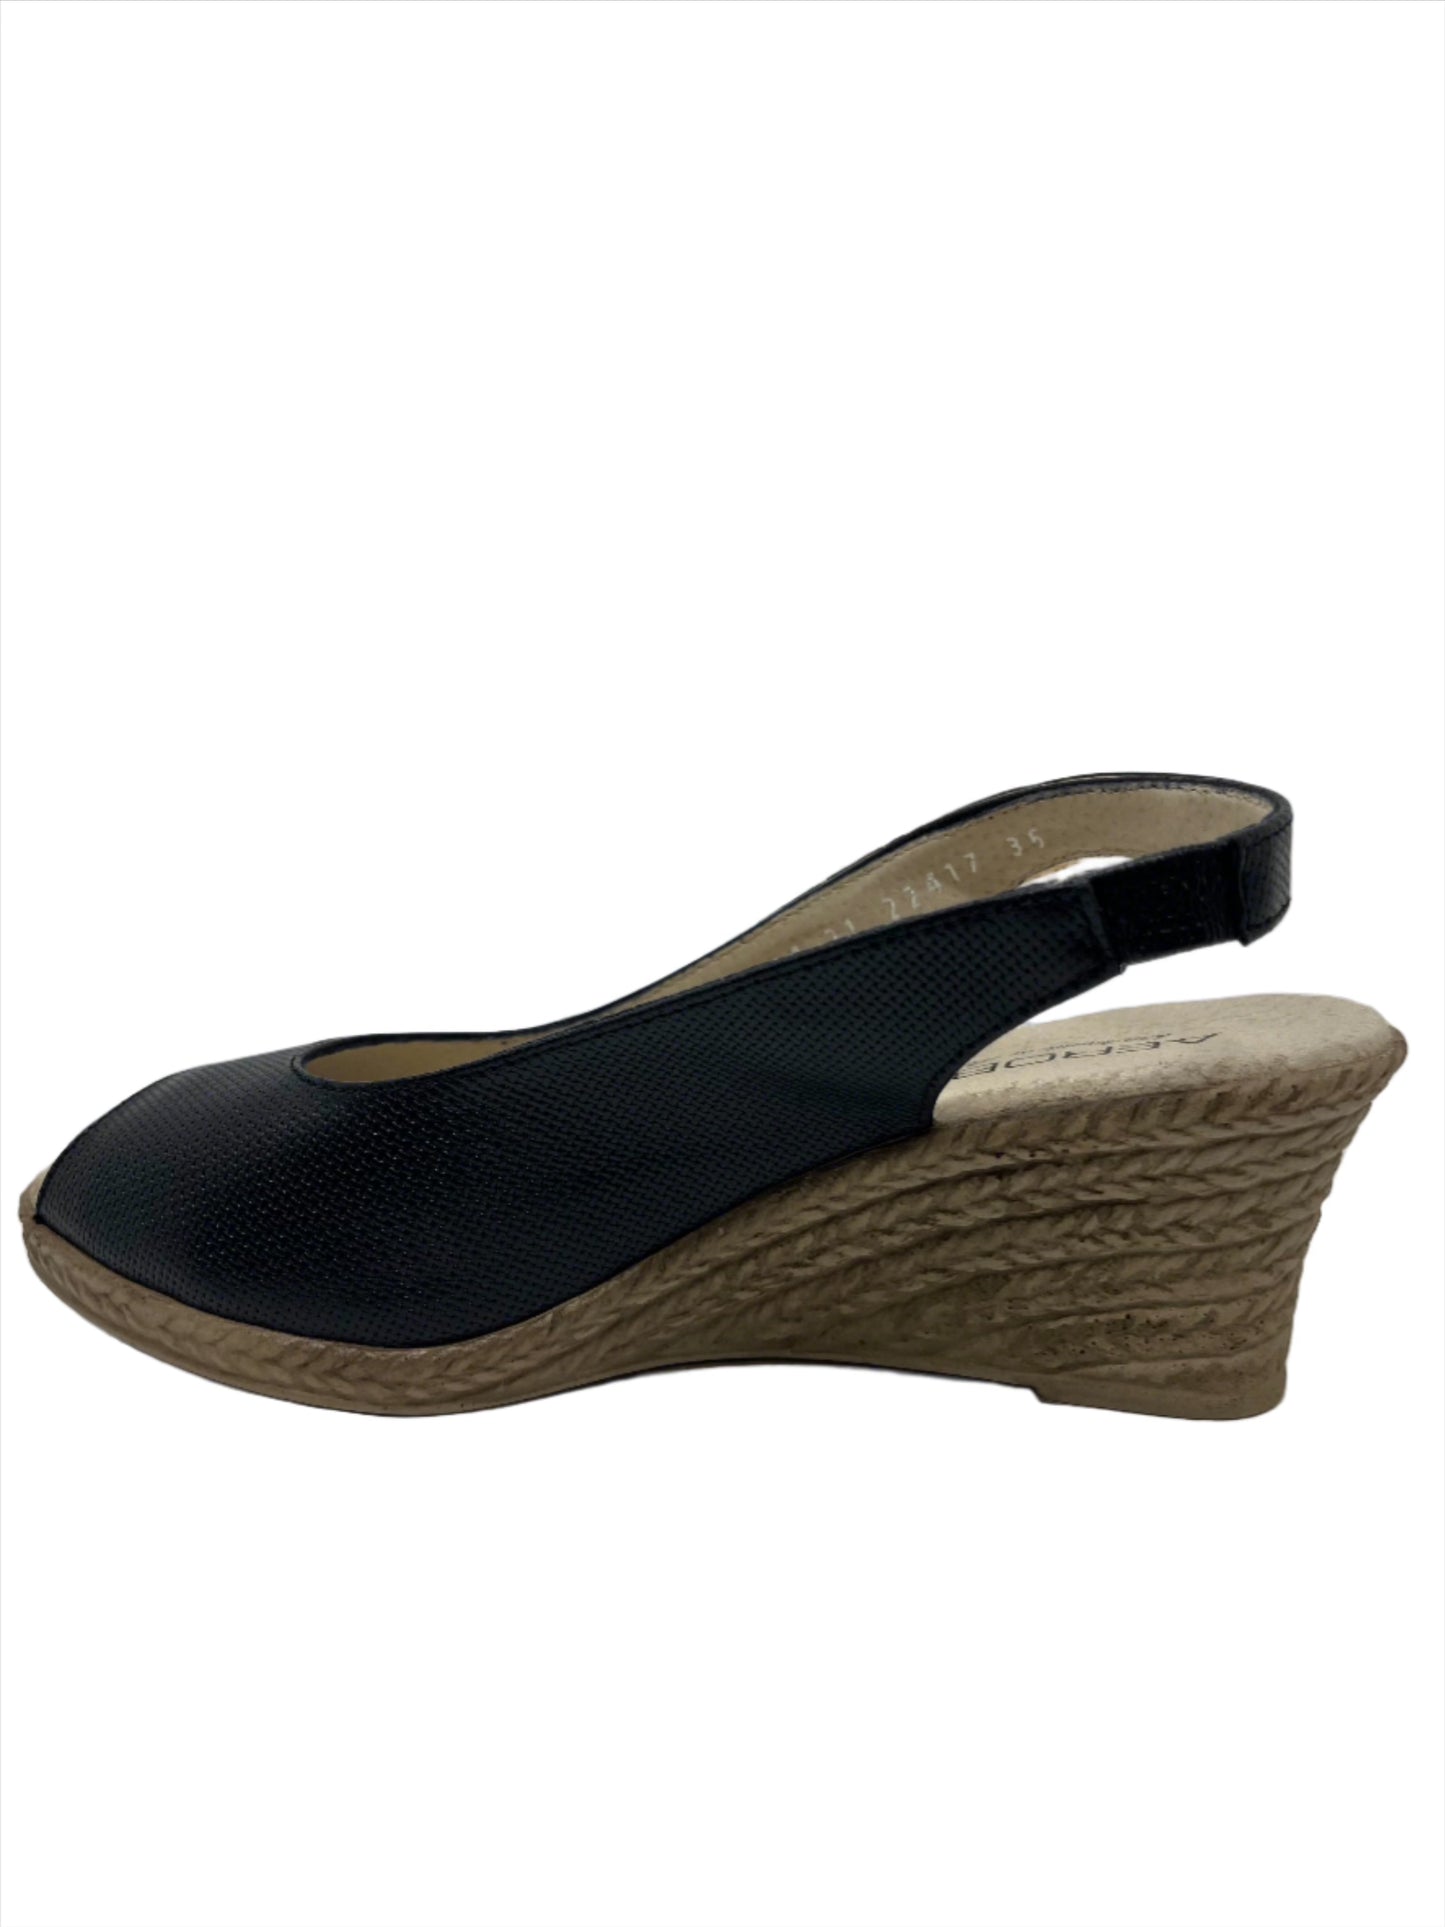 ALBA BLACK wedge -  - BLACK, SLING BACK, wedge, womens shoes - Stomp Shoes Darwin